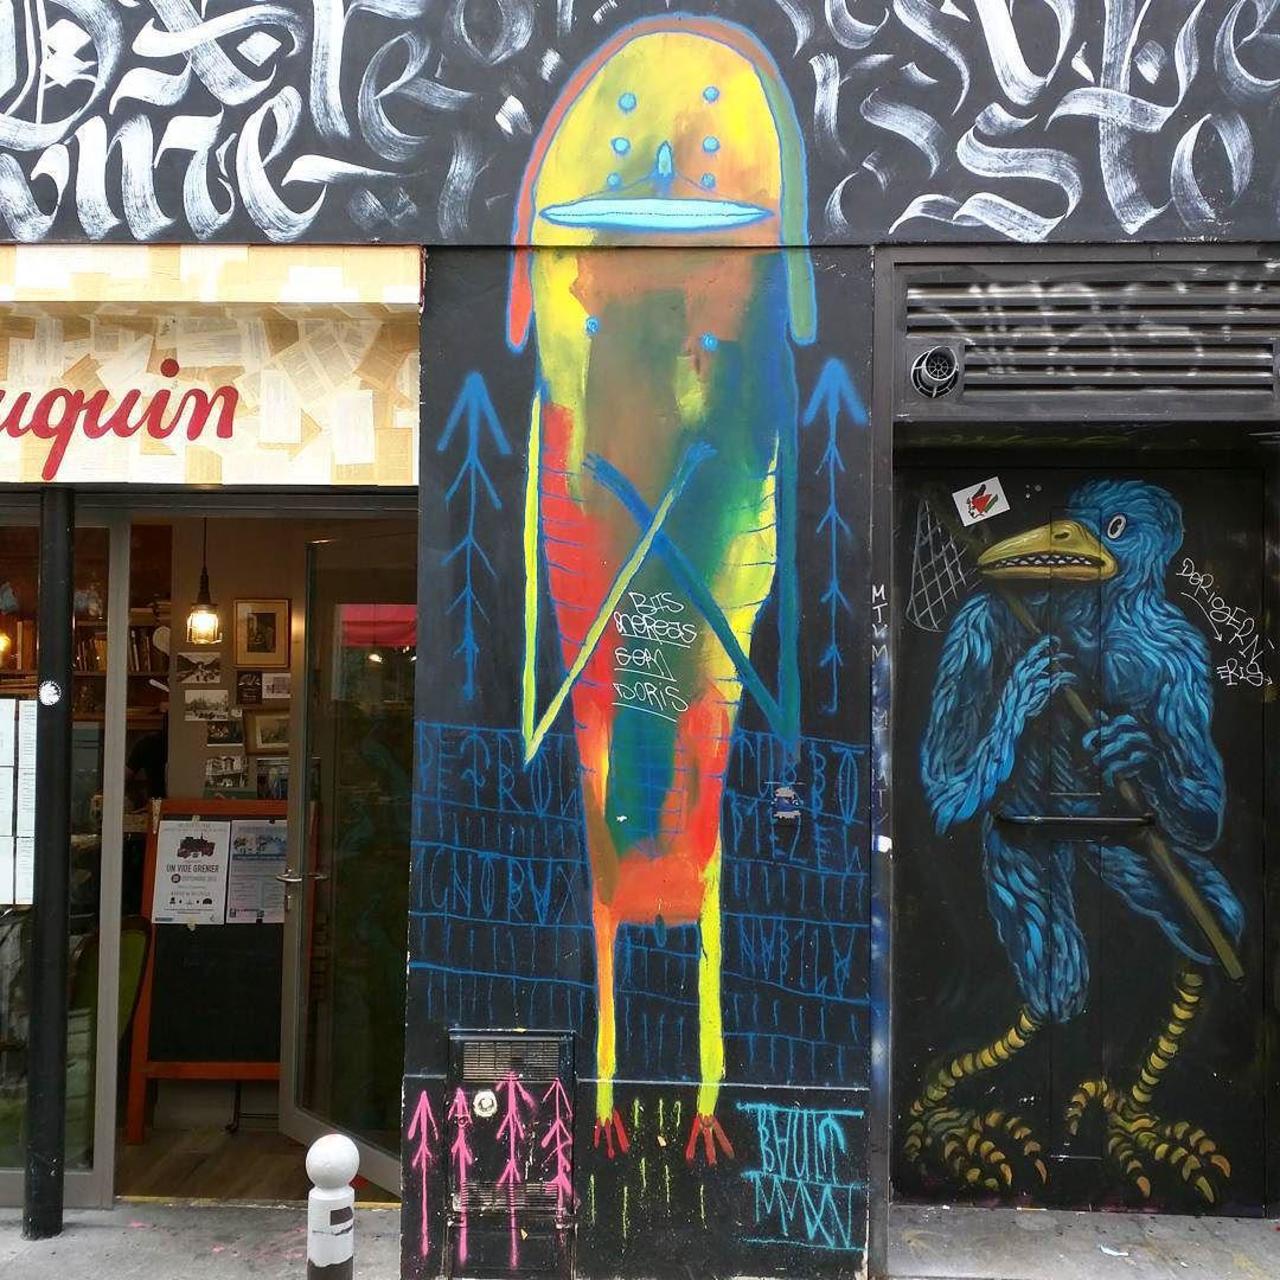 #Paris #graffiti photo by @alphaquadra http://ift.tt/1GhGstL #StreetArt http://t.co/NGXUq1qVGH